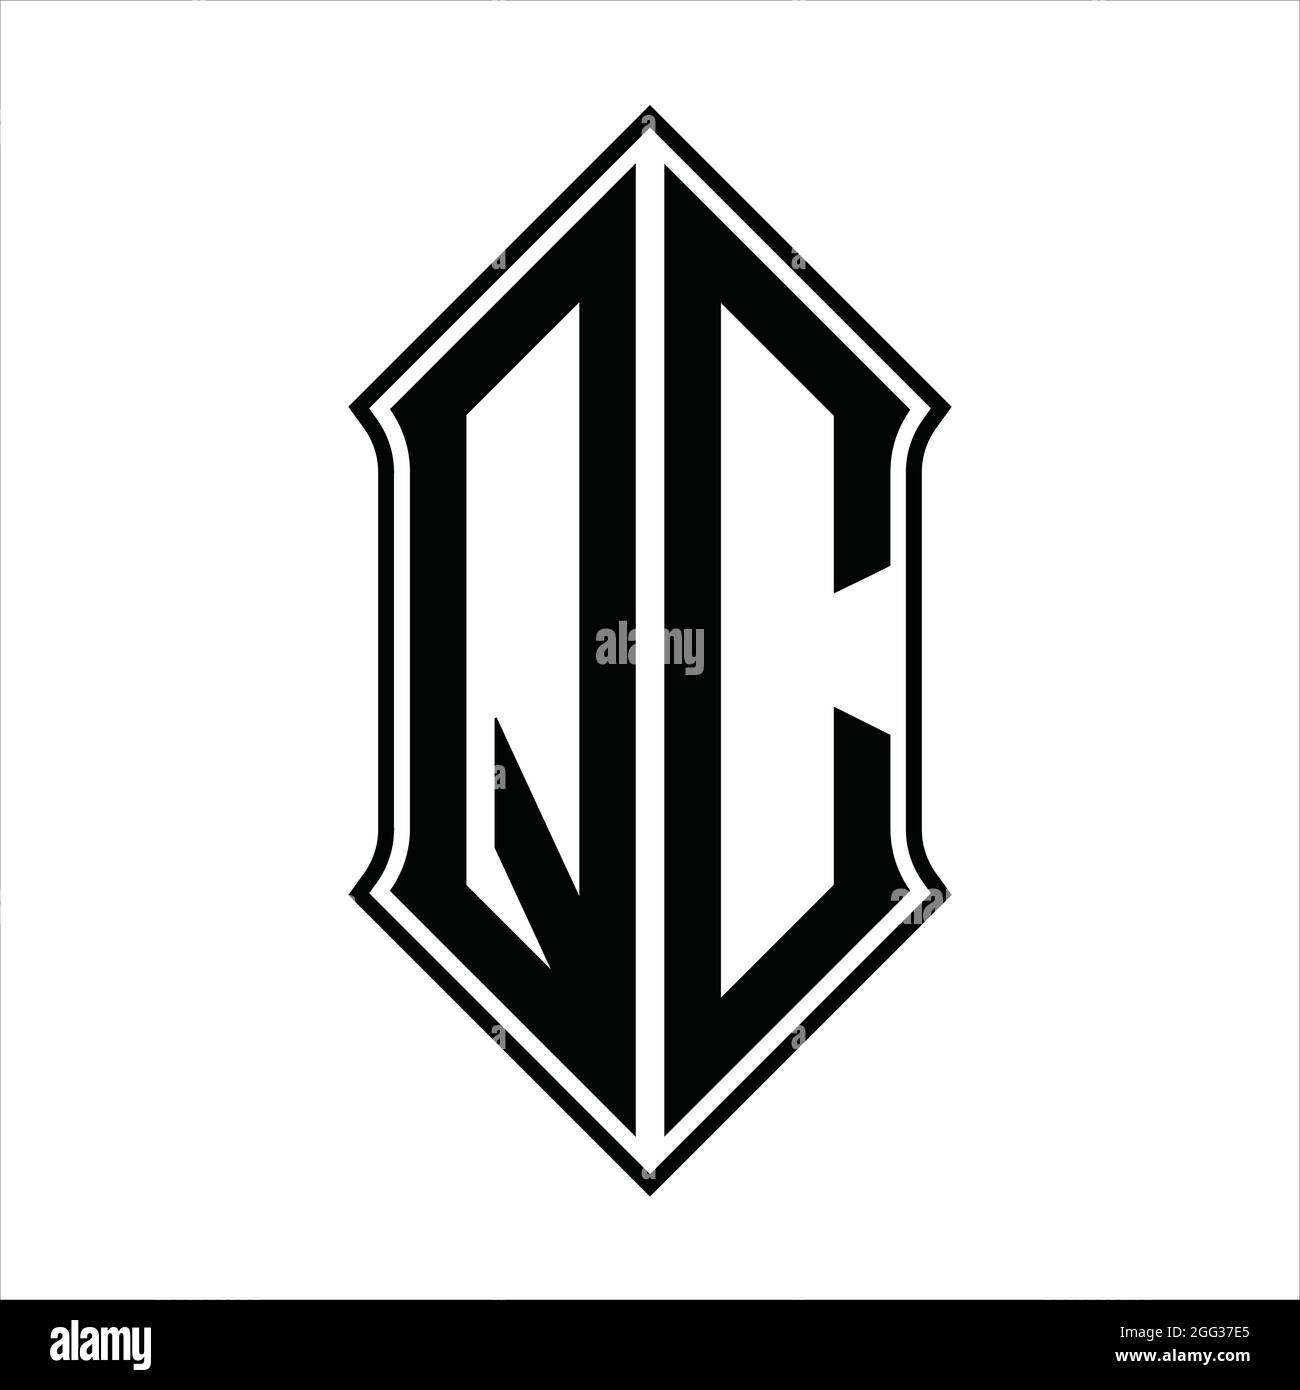 QC Logo monogram with shieldshape and black outline design template ...